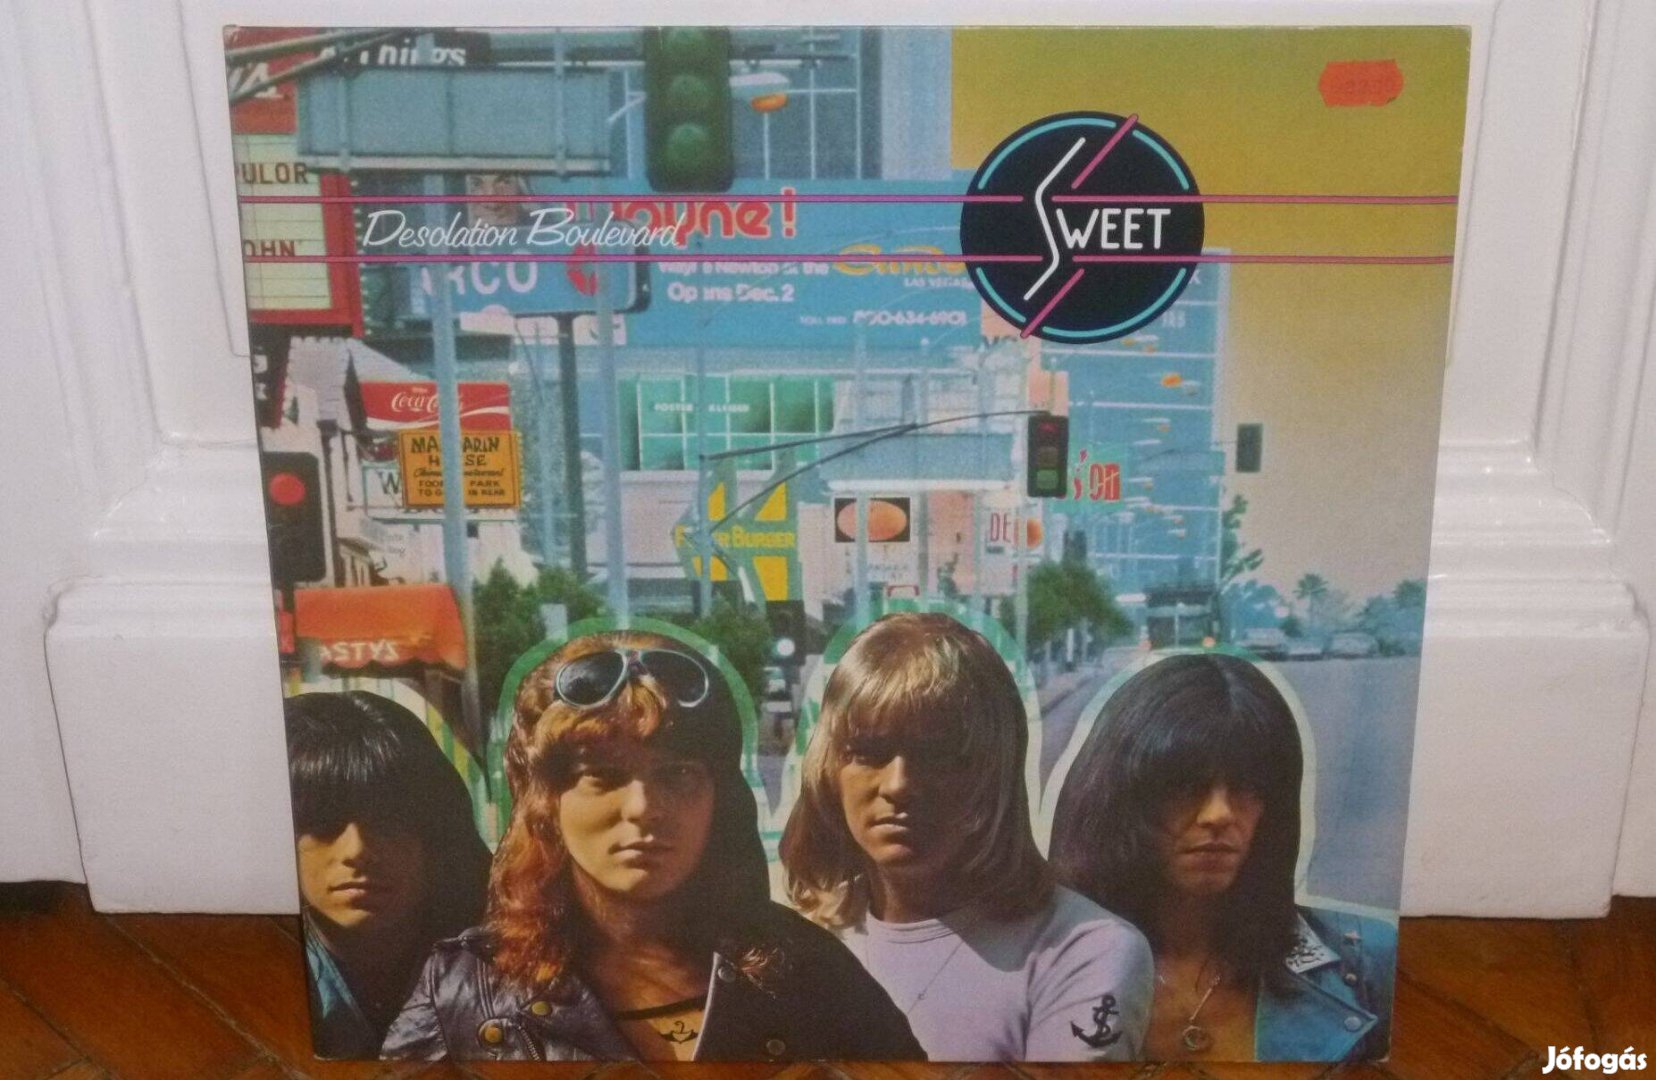 Sweet - Desolation Boulevard LP 1974 Germany Gatefold